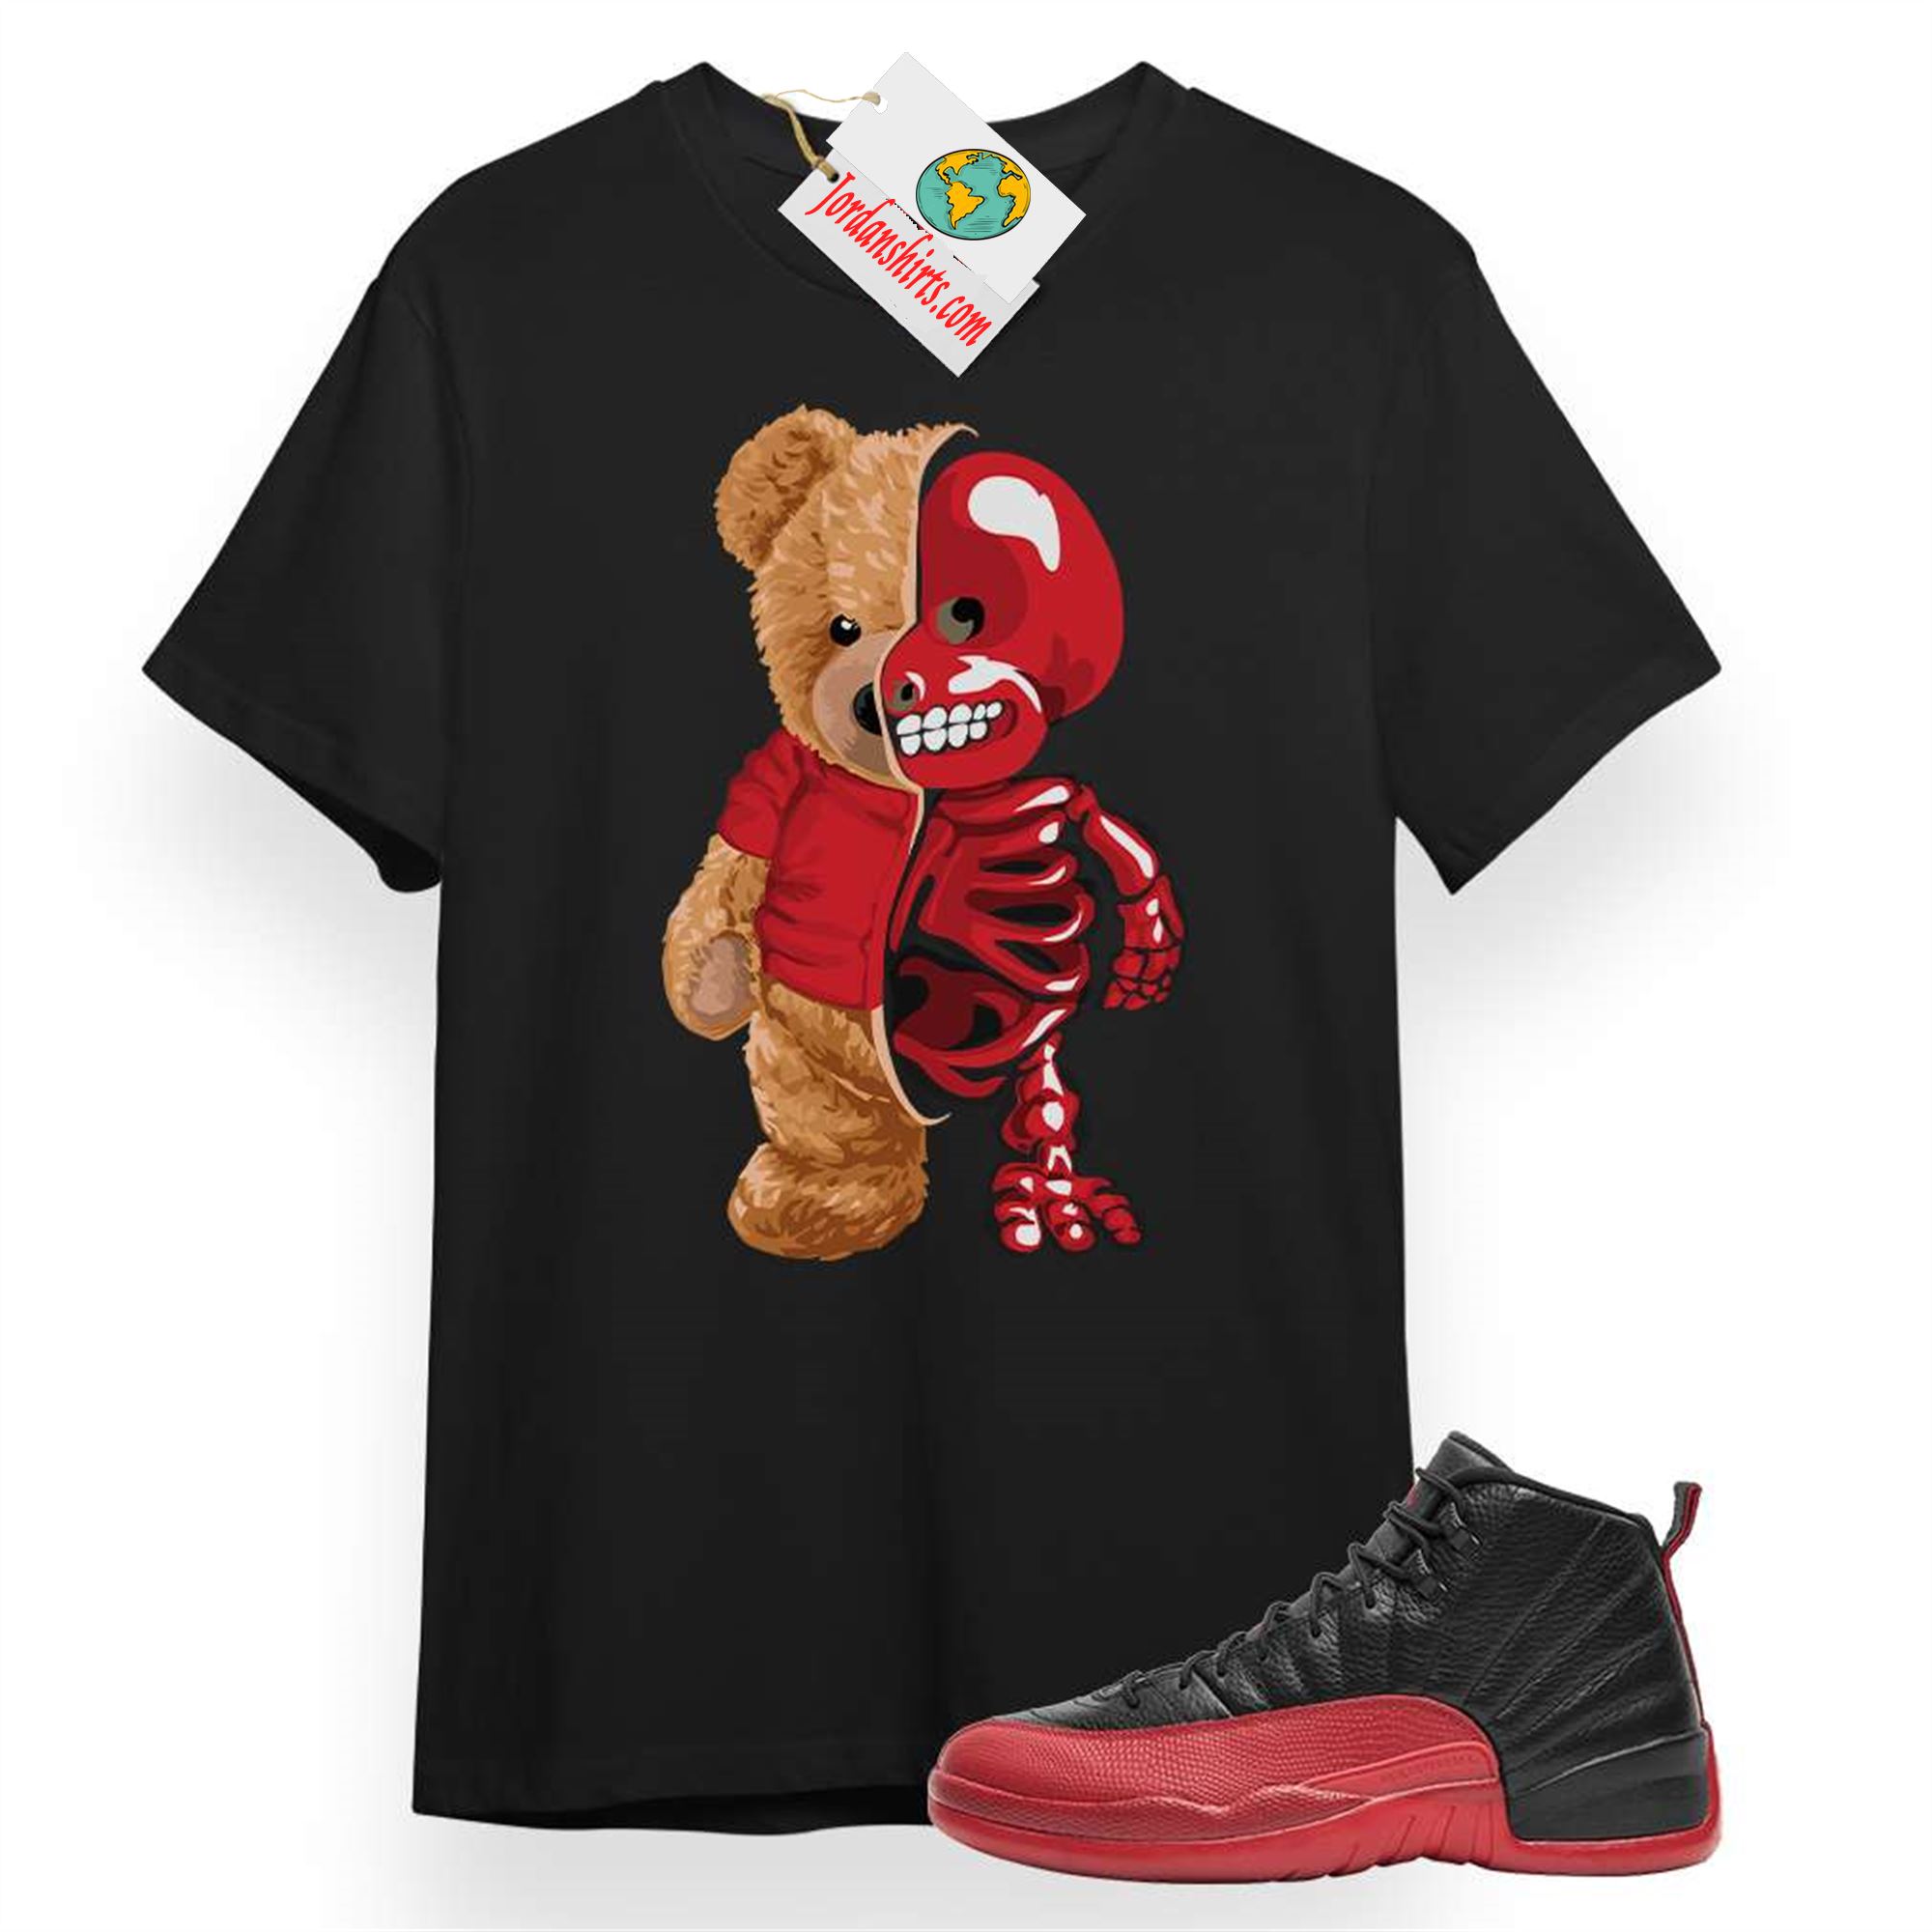 Jordan 12 Shirt, Teddy Bear Terminator Black T-shirt Air Jordan 12 Flu Game 12s Size Up To 5xl